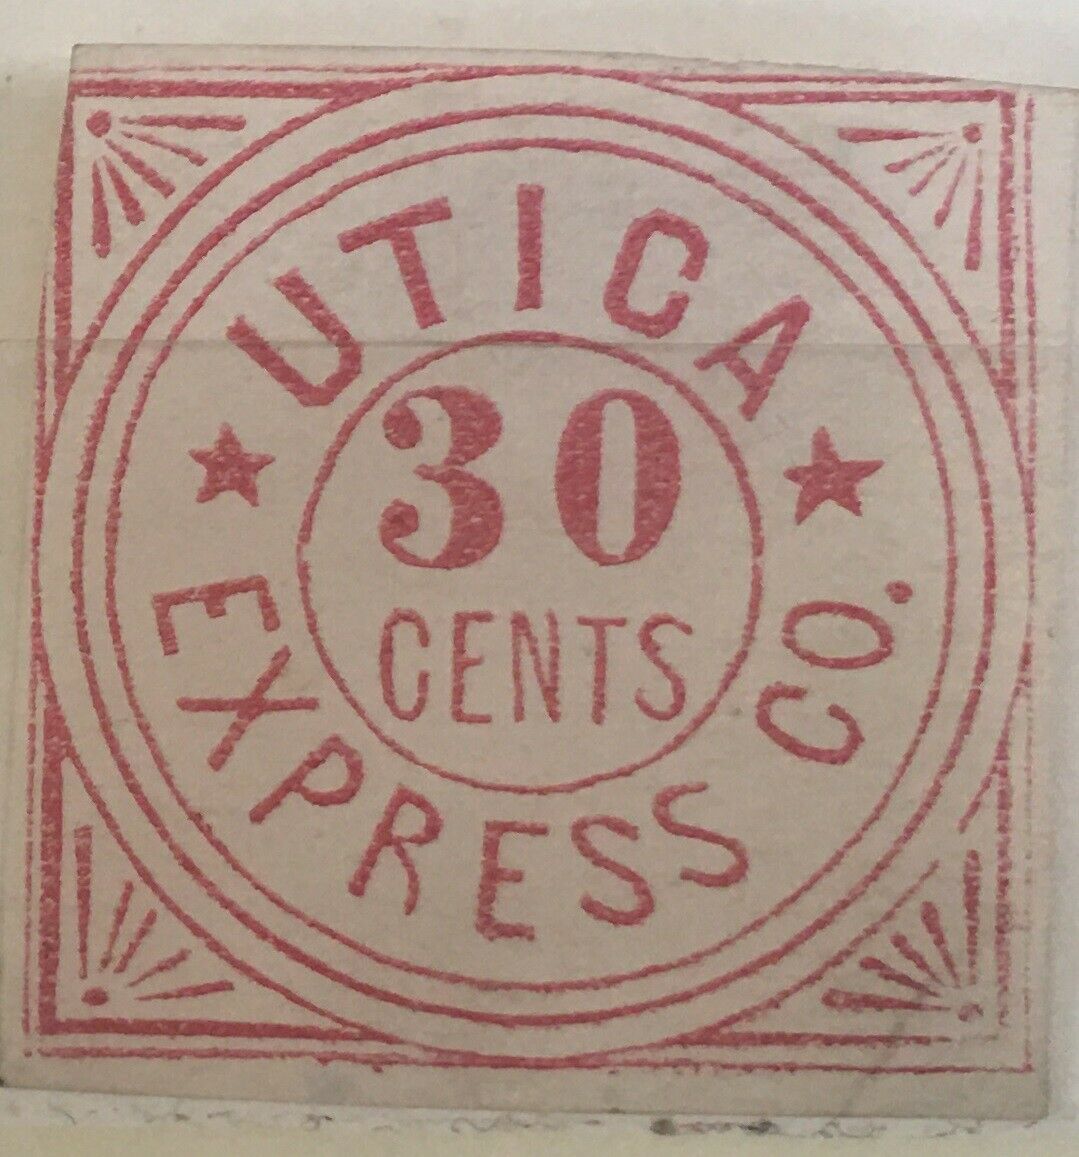 U.s. Local Post "utica Express Co" Bogus Fakes Forgeries Reprints